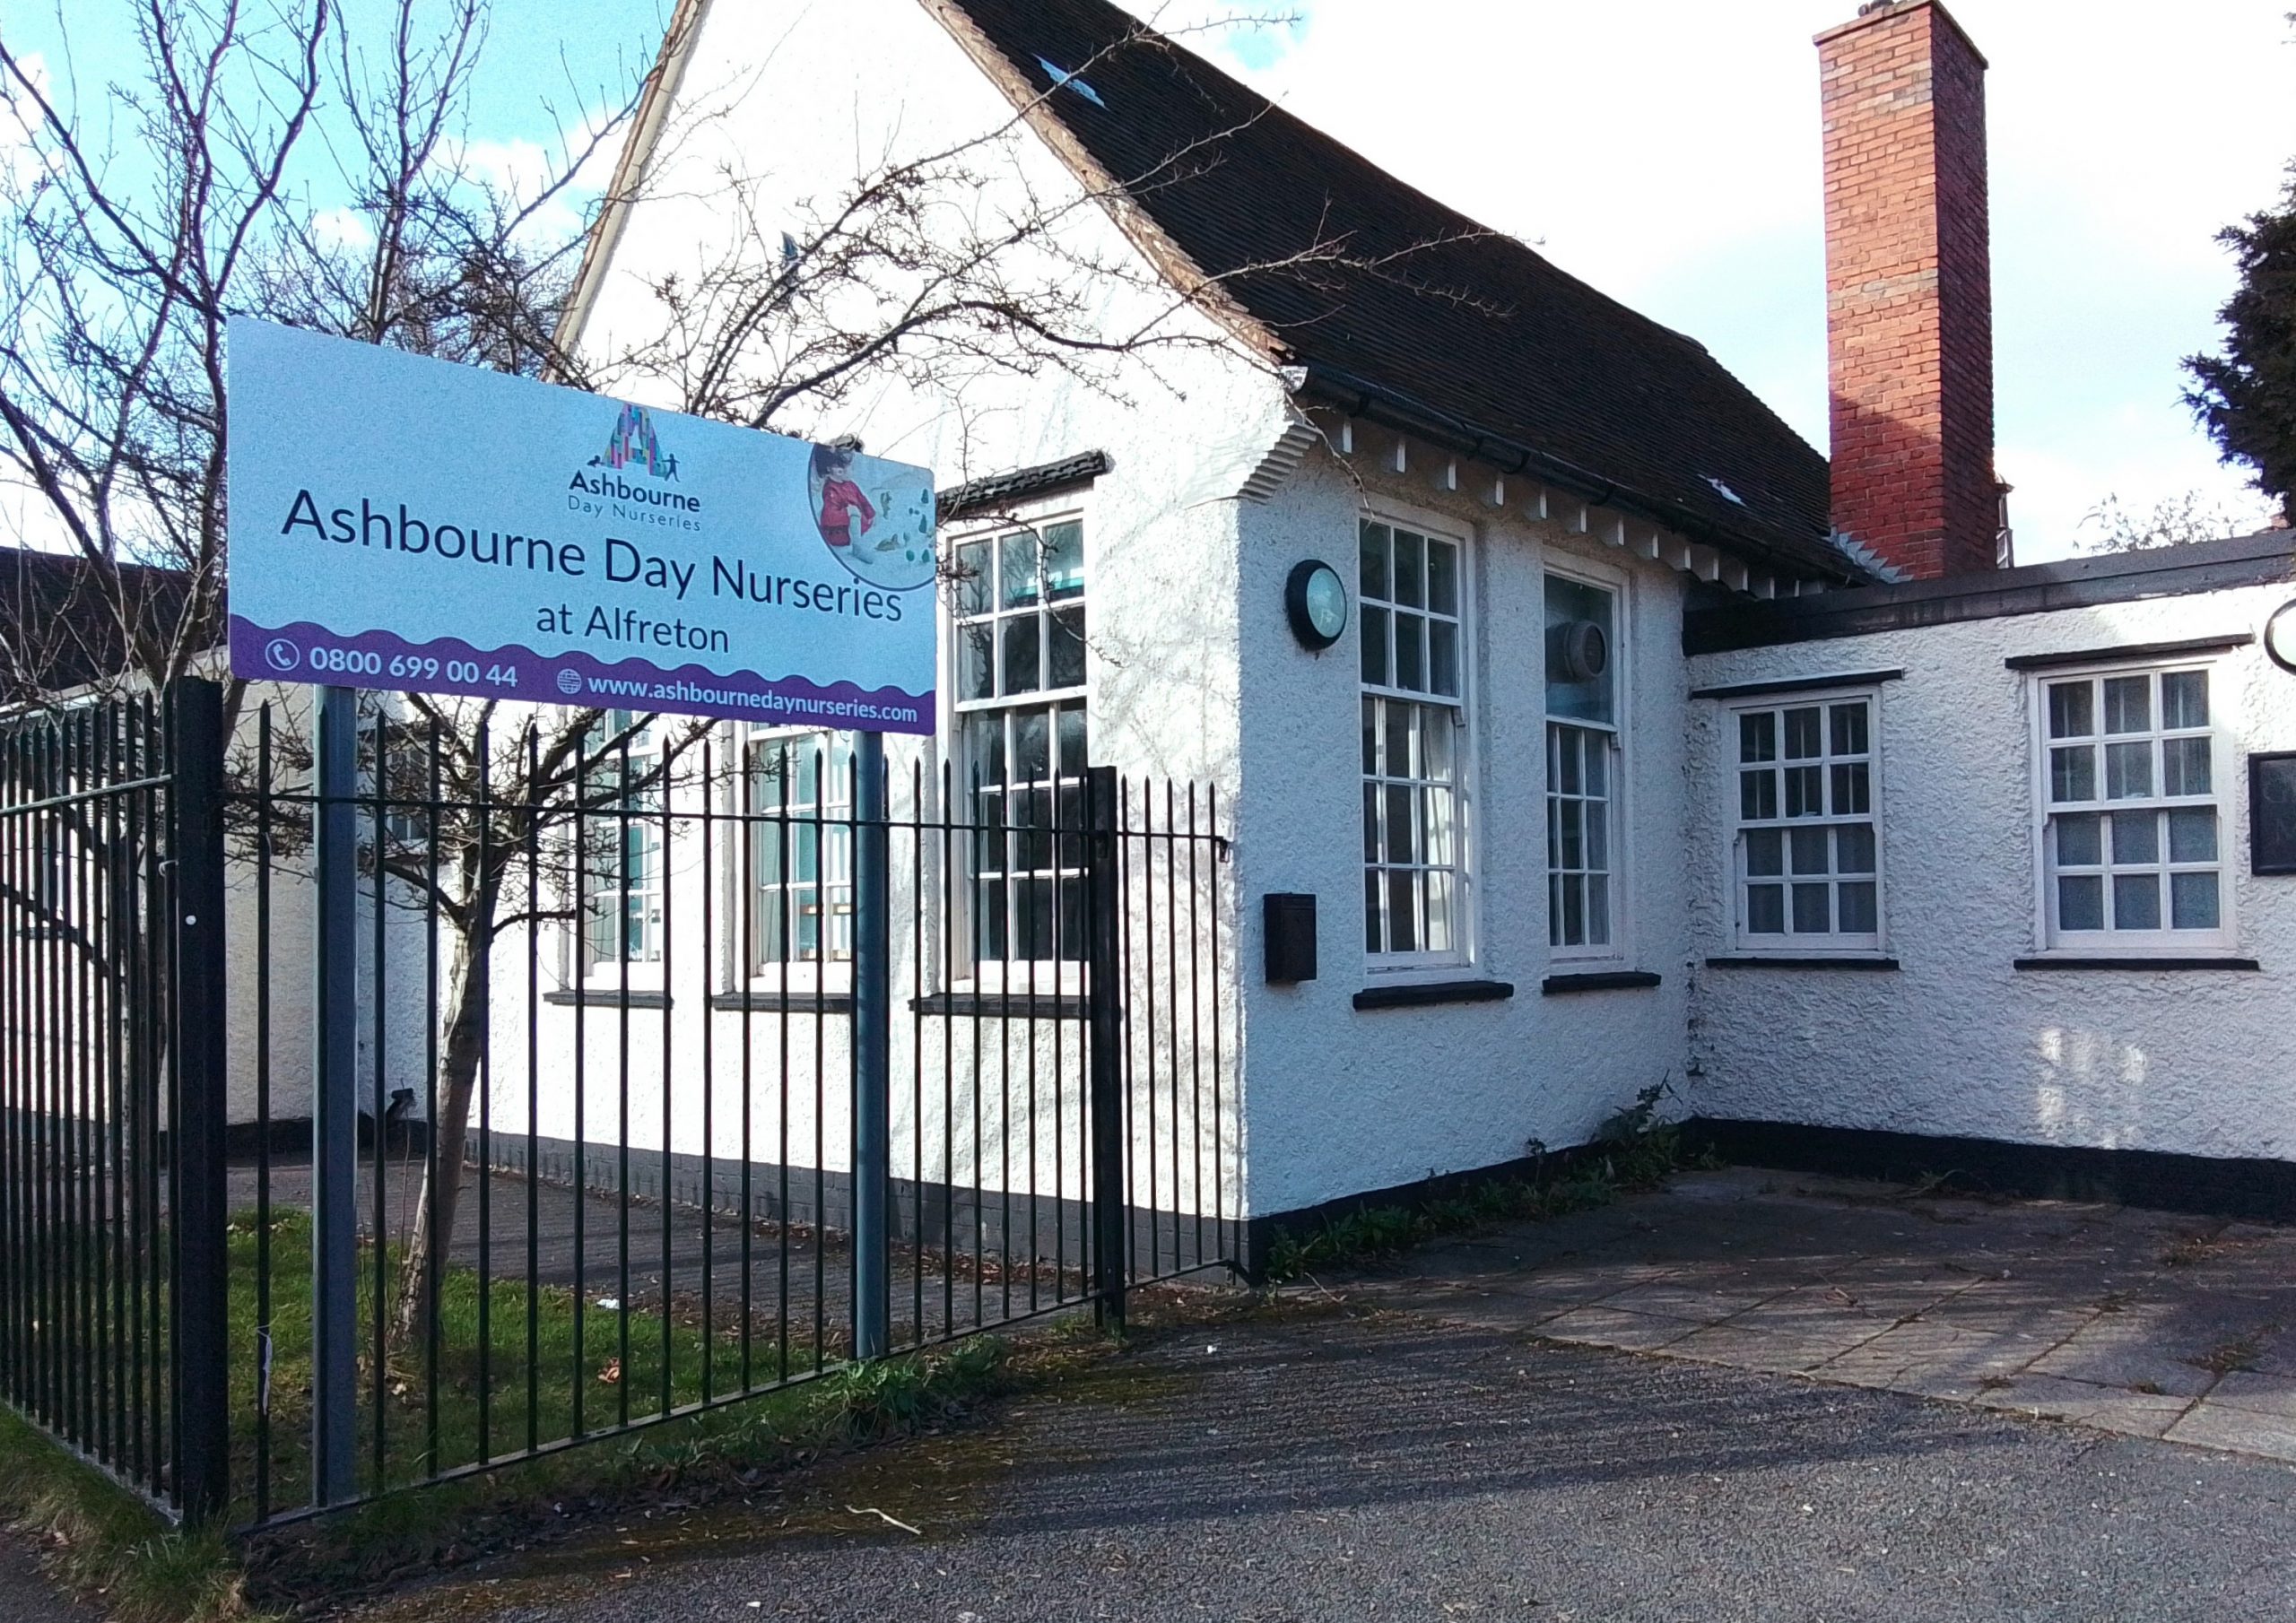 Ashbourne Day Nurseries has taken over the nursery on Grange Street in Alfreton